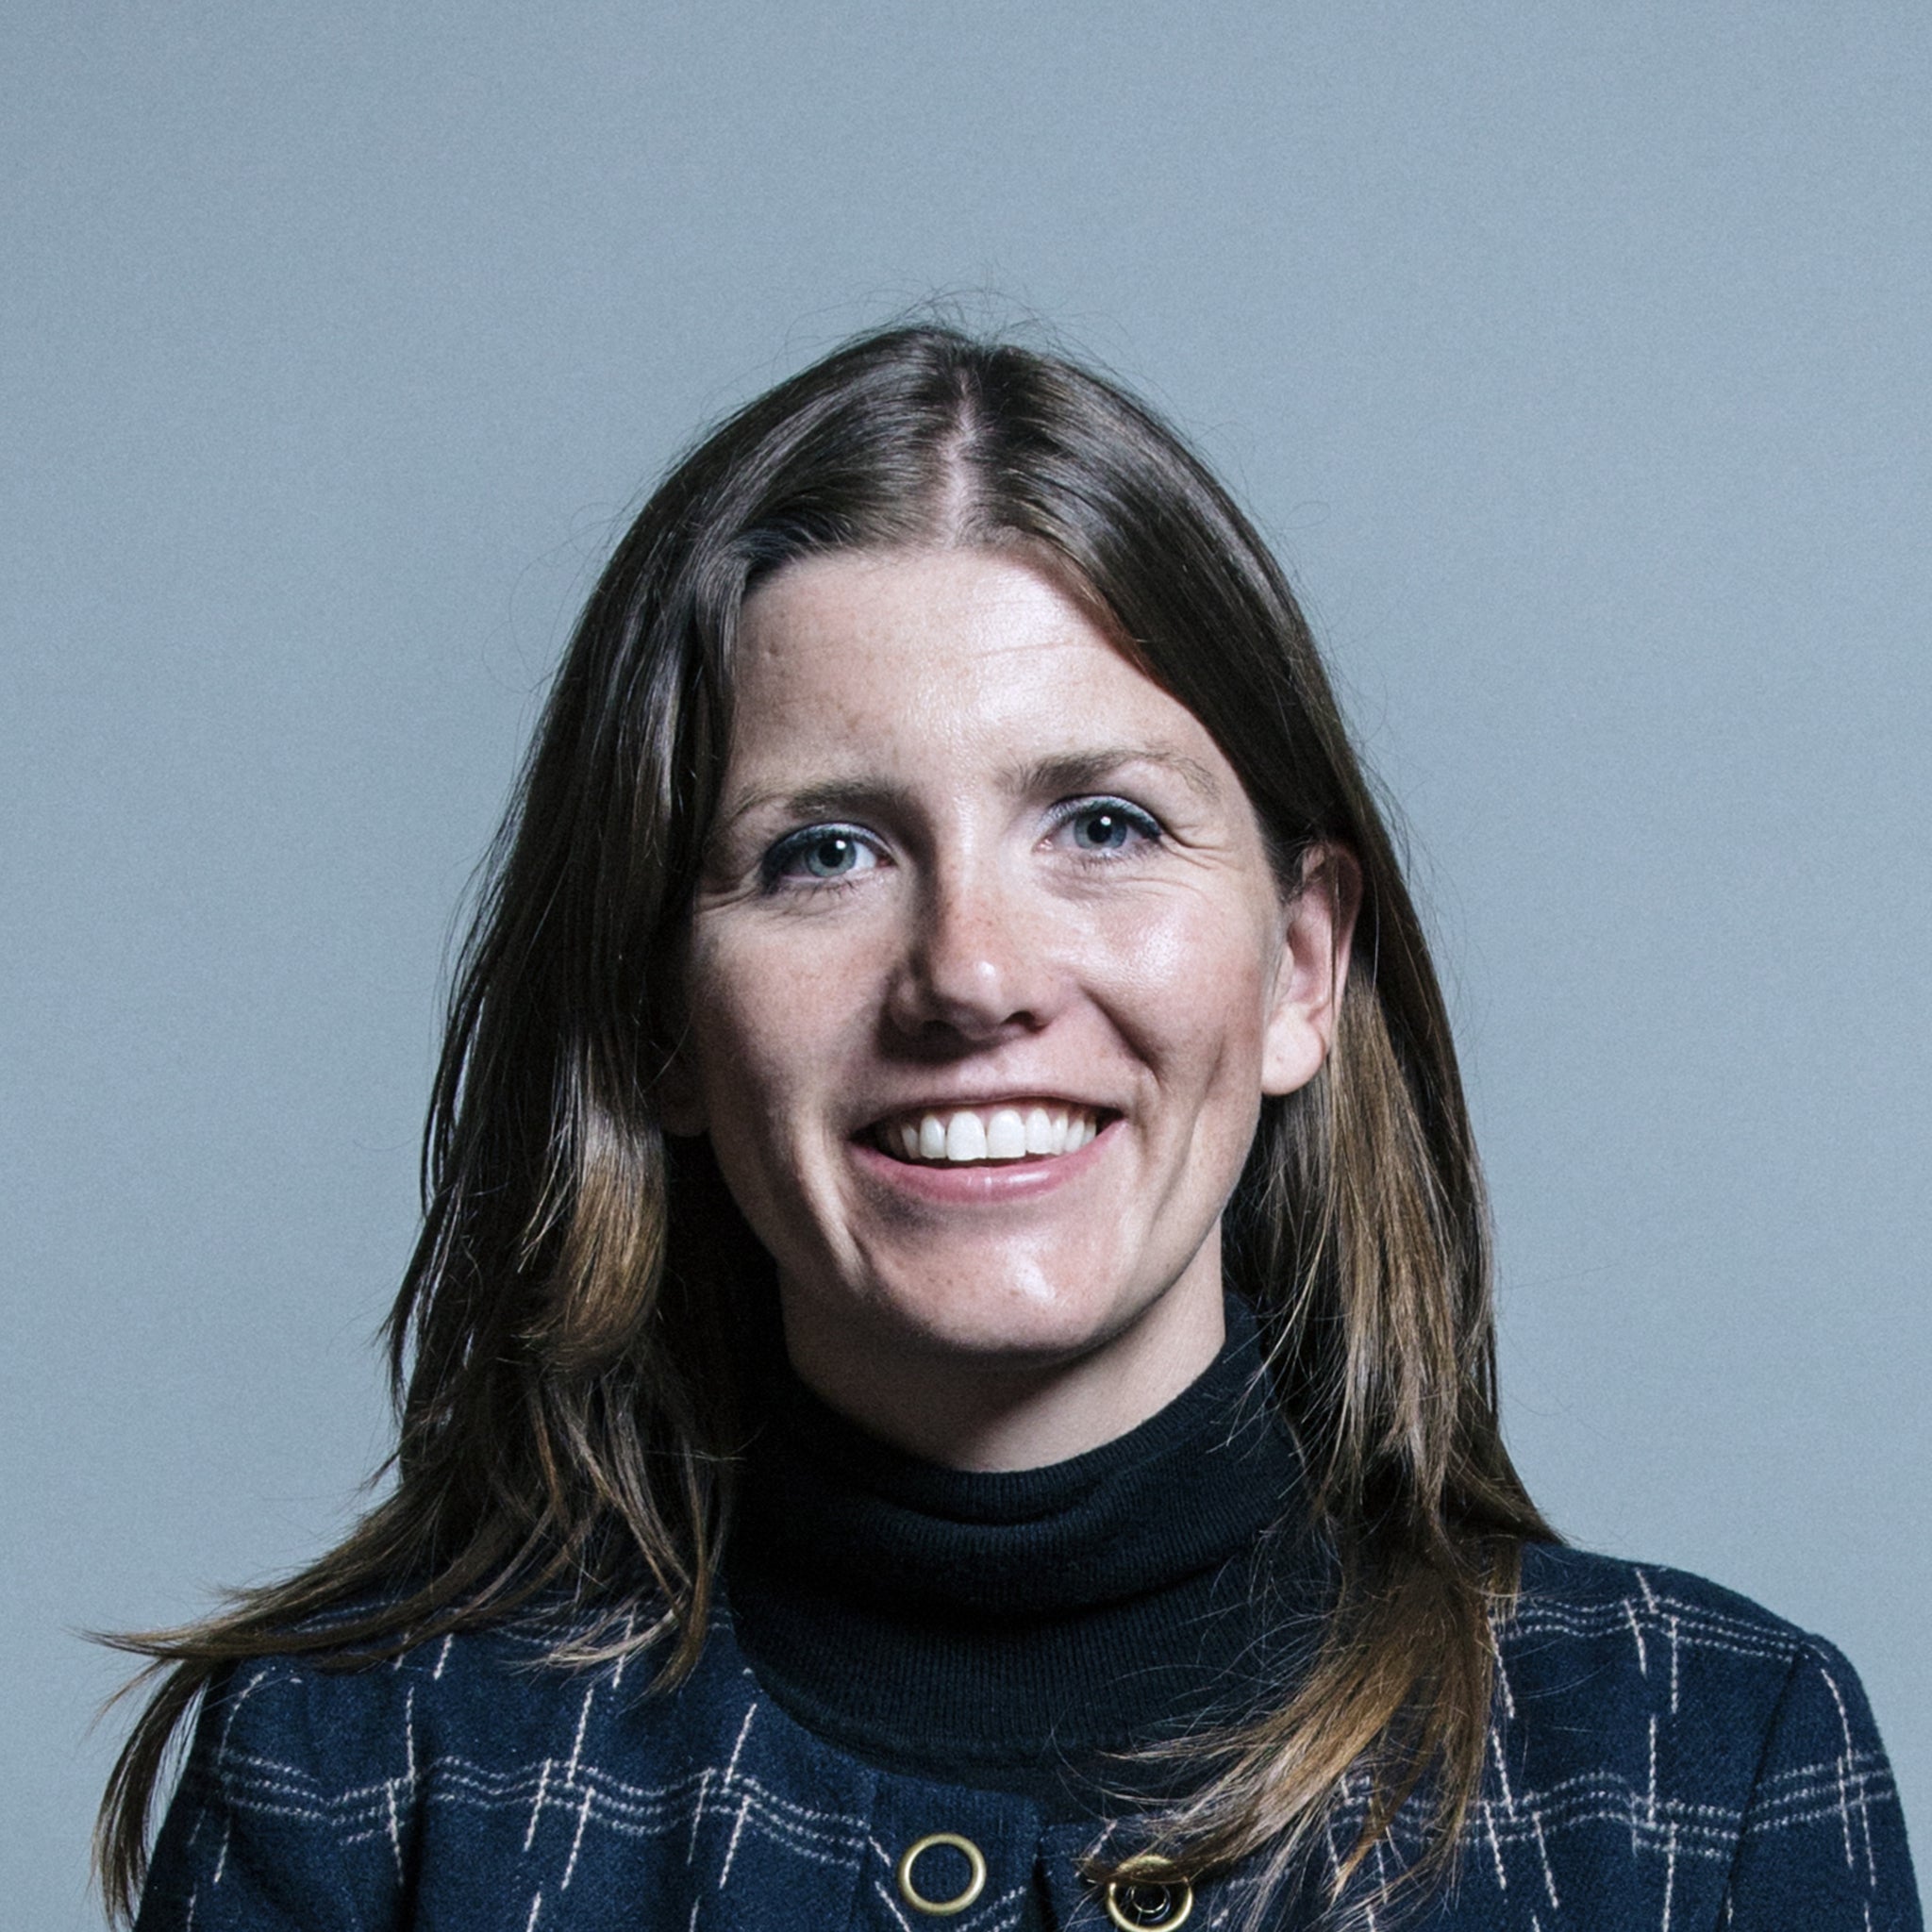 Michelle Donelan (Chris McAndrew/UK Parliament)